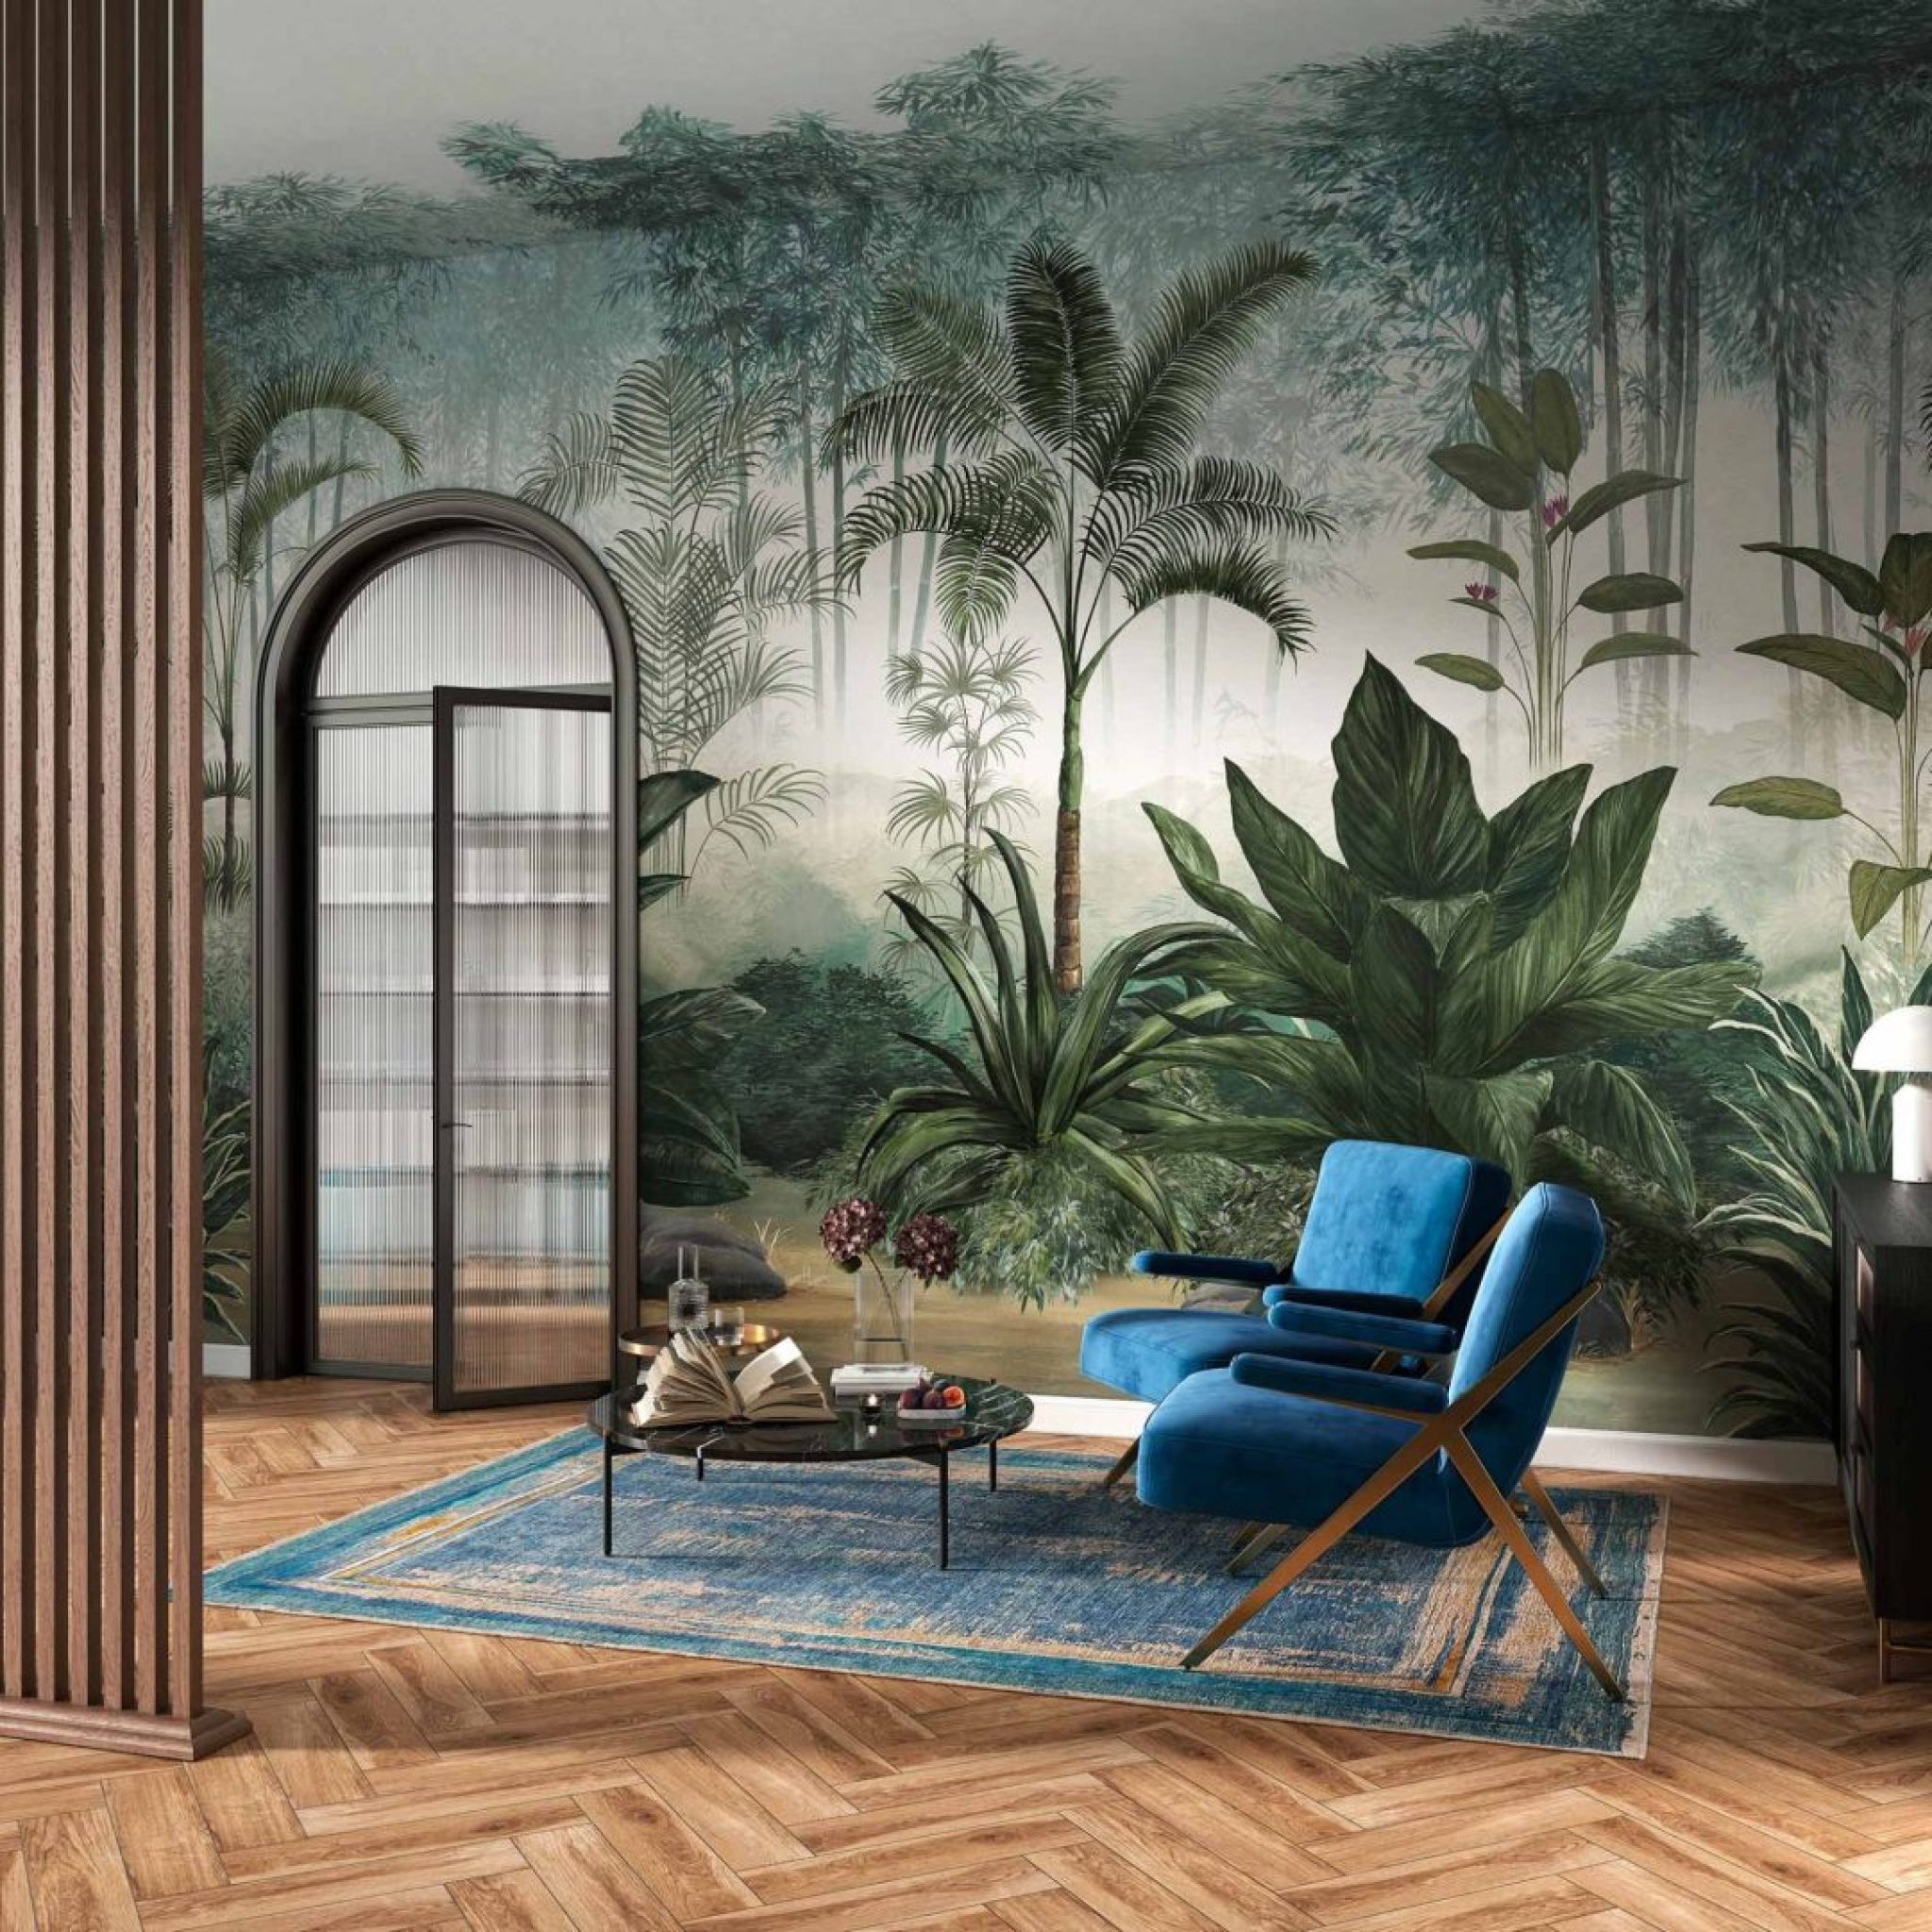 Jungle Wallpaper 'Morgan' by Tecnografica for walls and ceiling